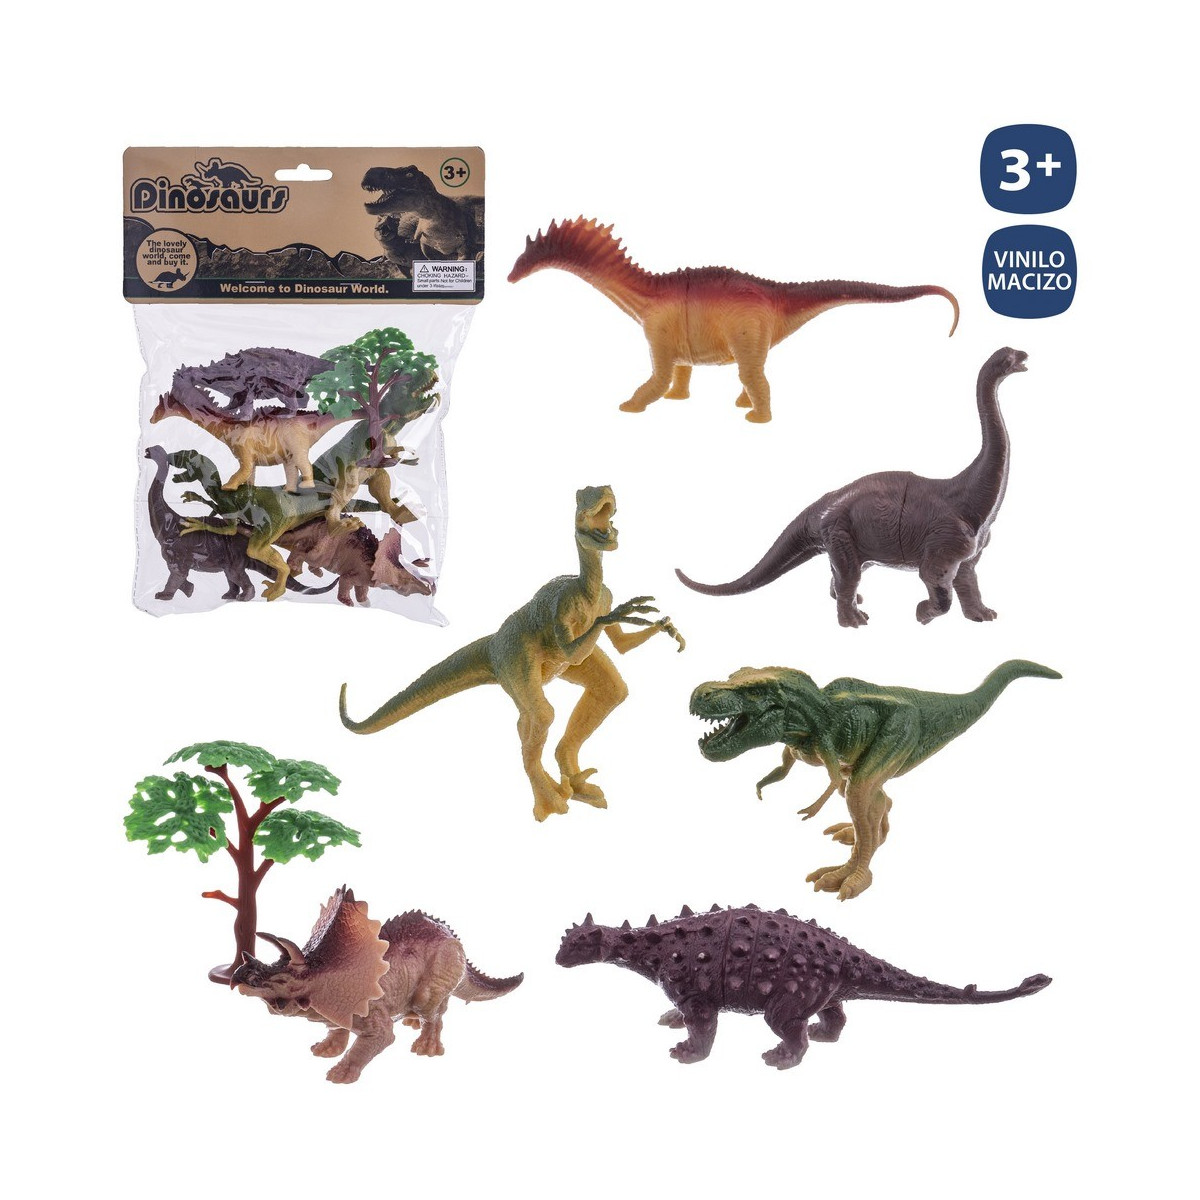 S 6 dinosaurio con accesorios vinilo 16 cm